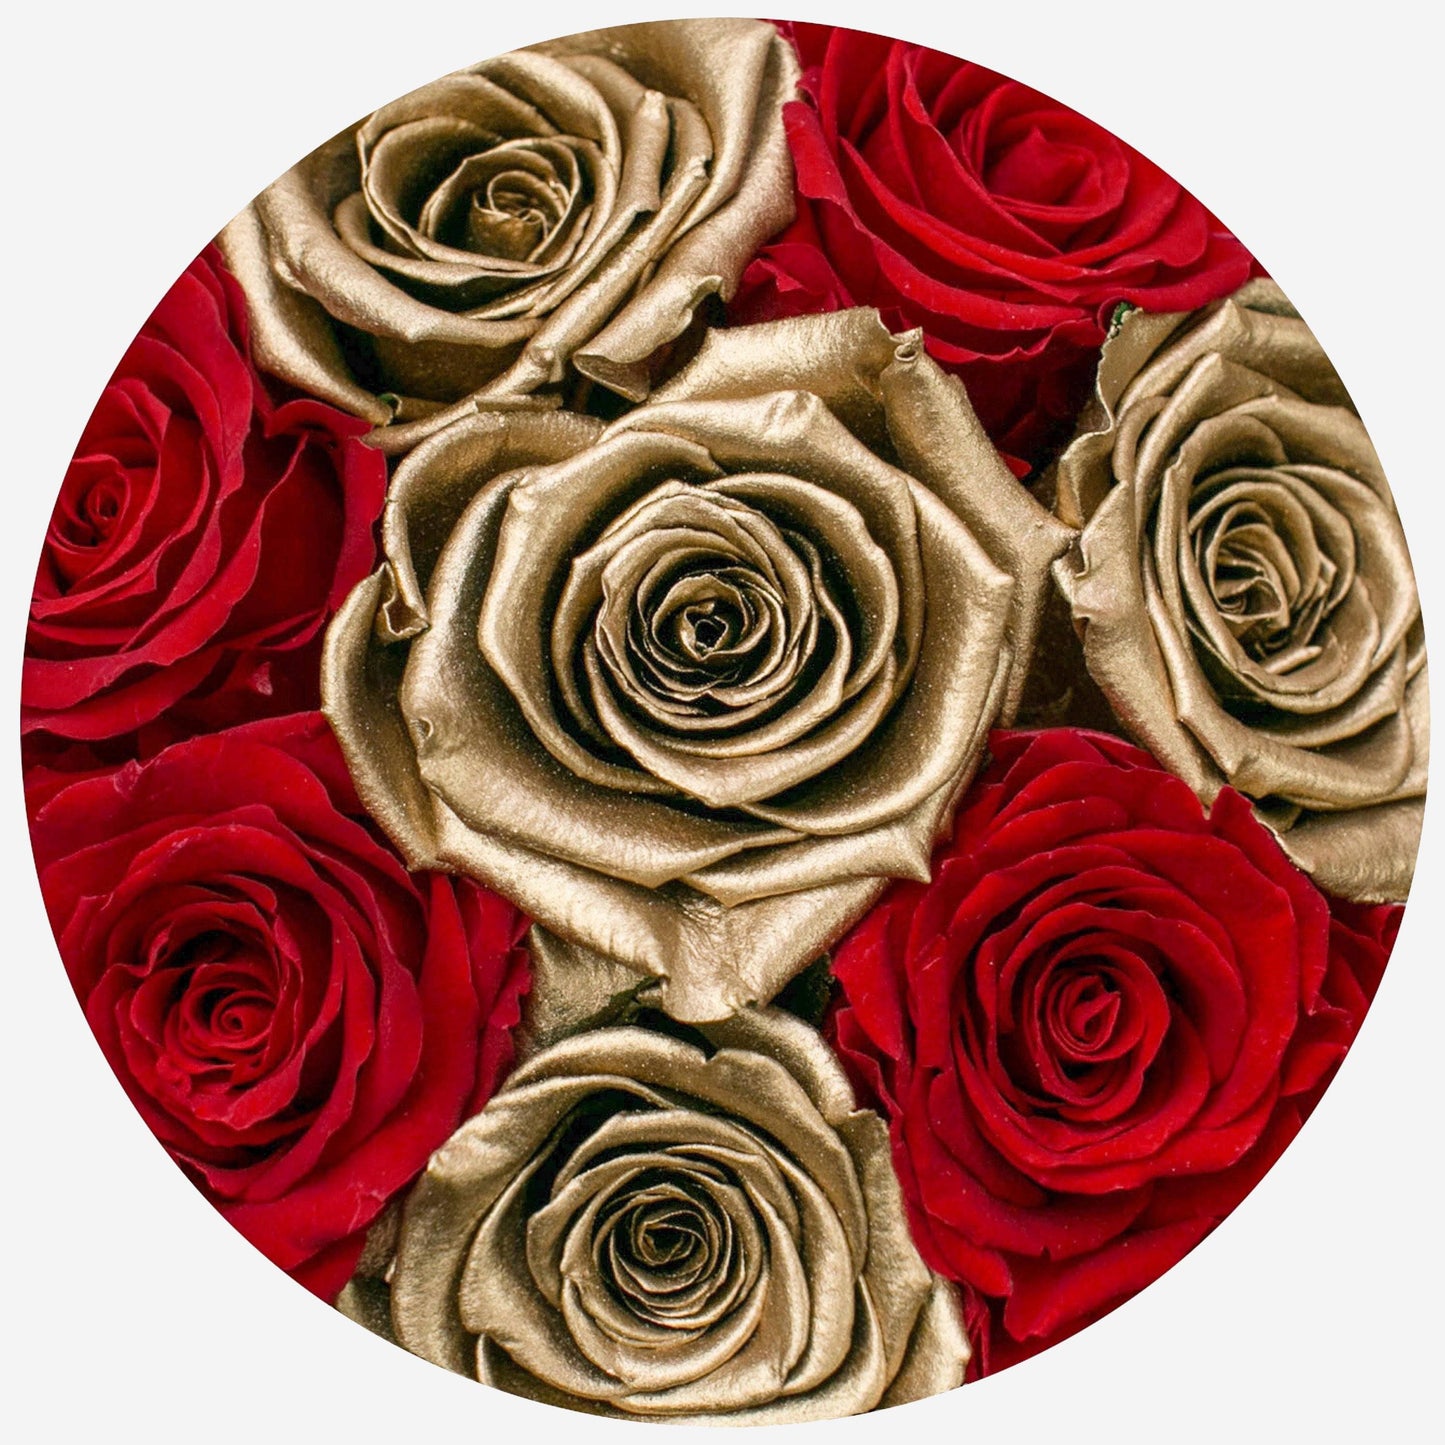 Basic Gold Box | Red & Gold Roses - The Million Roses